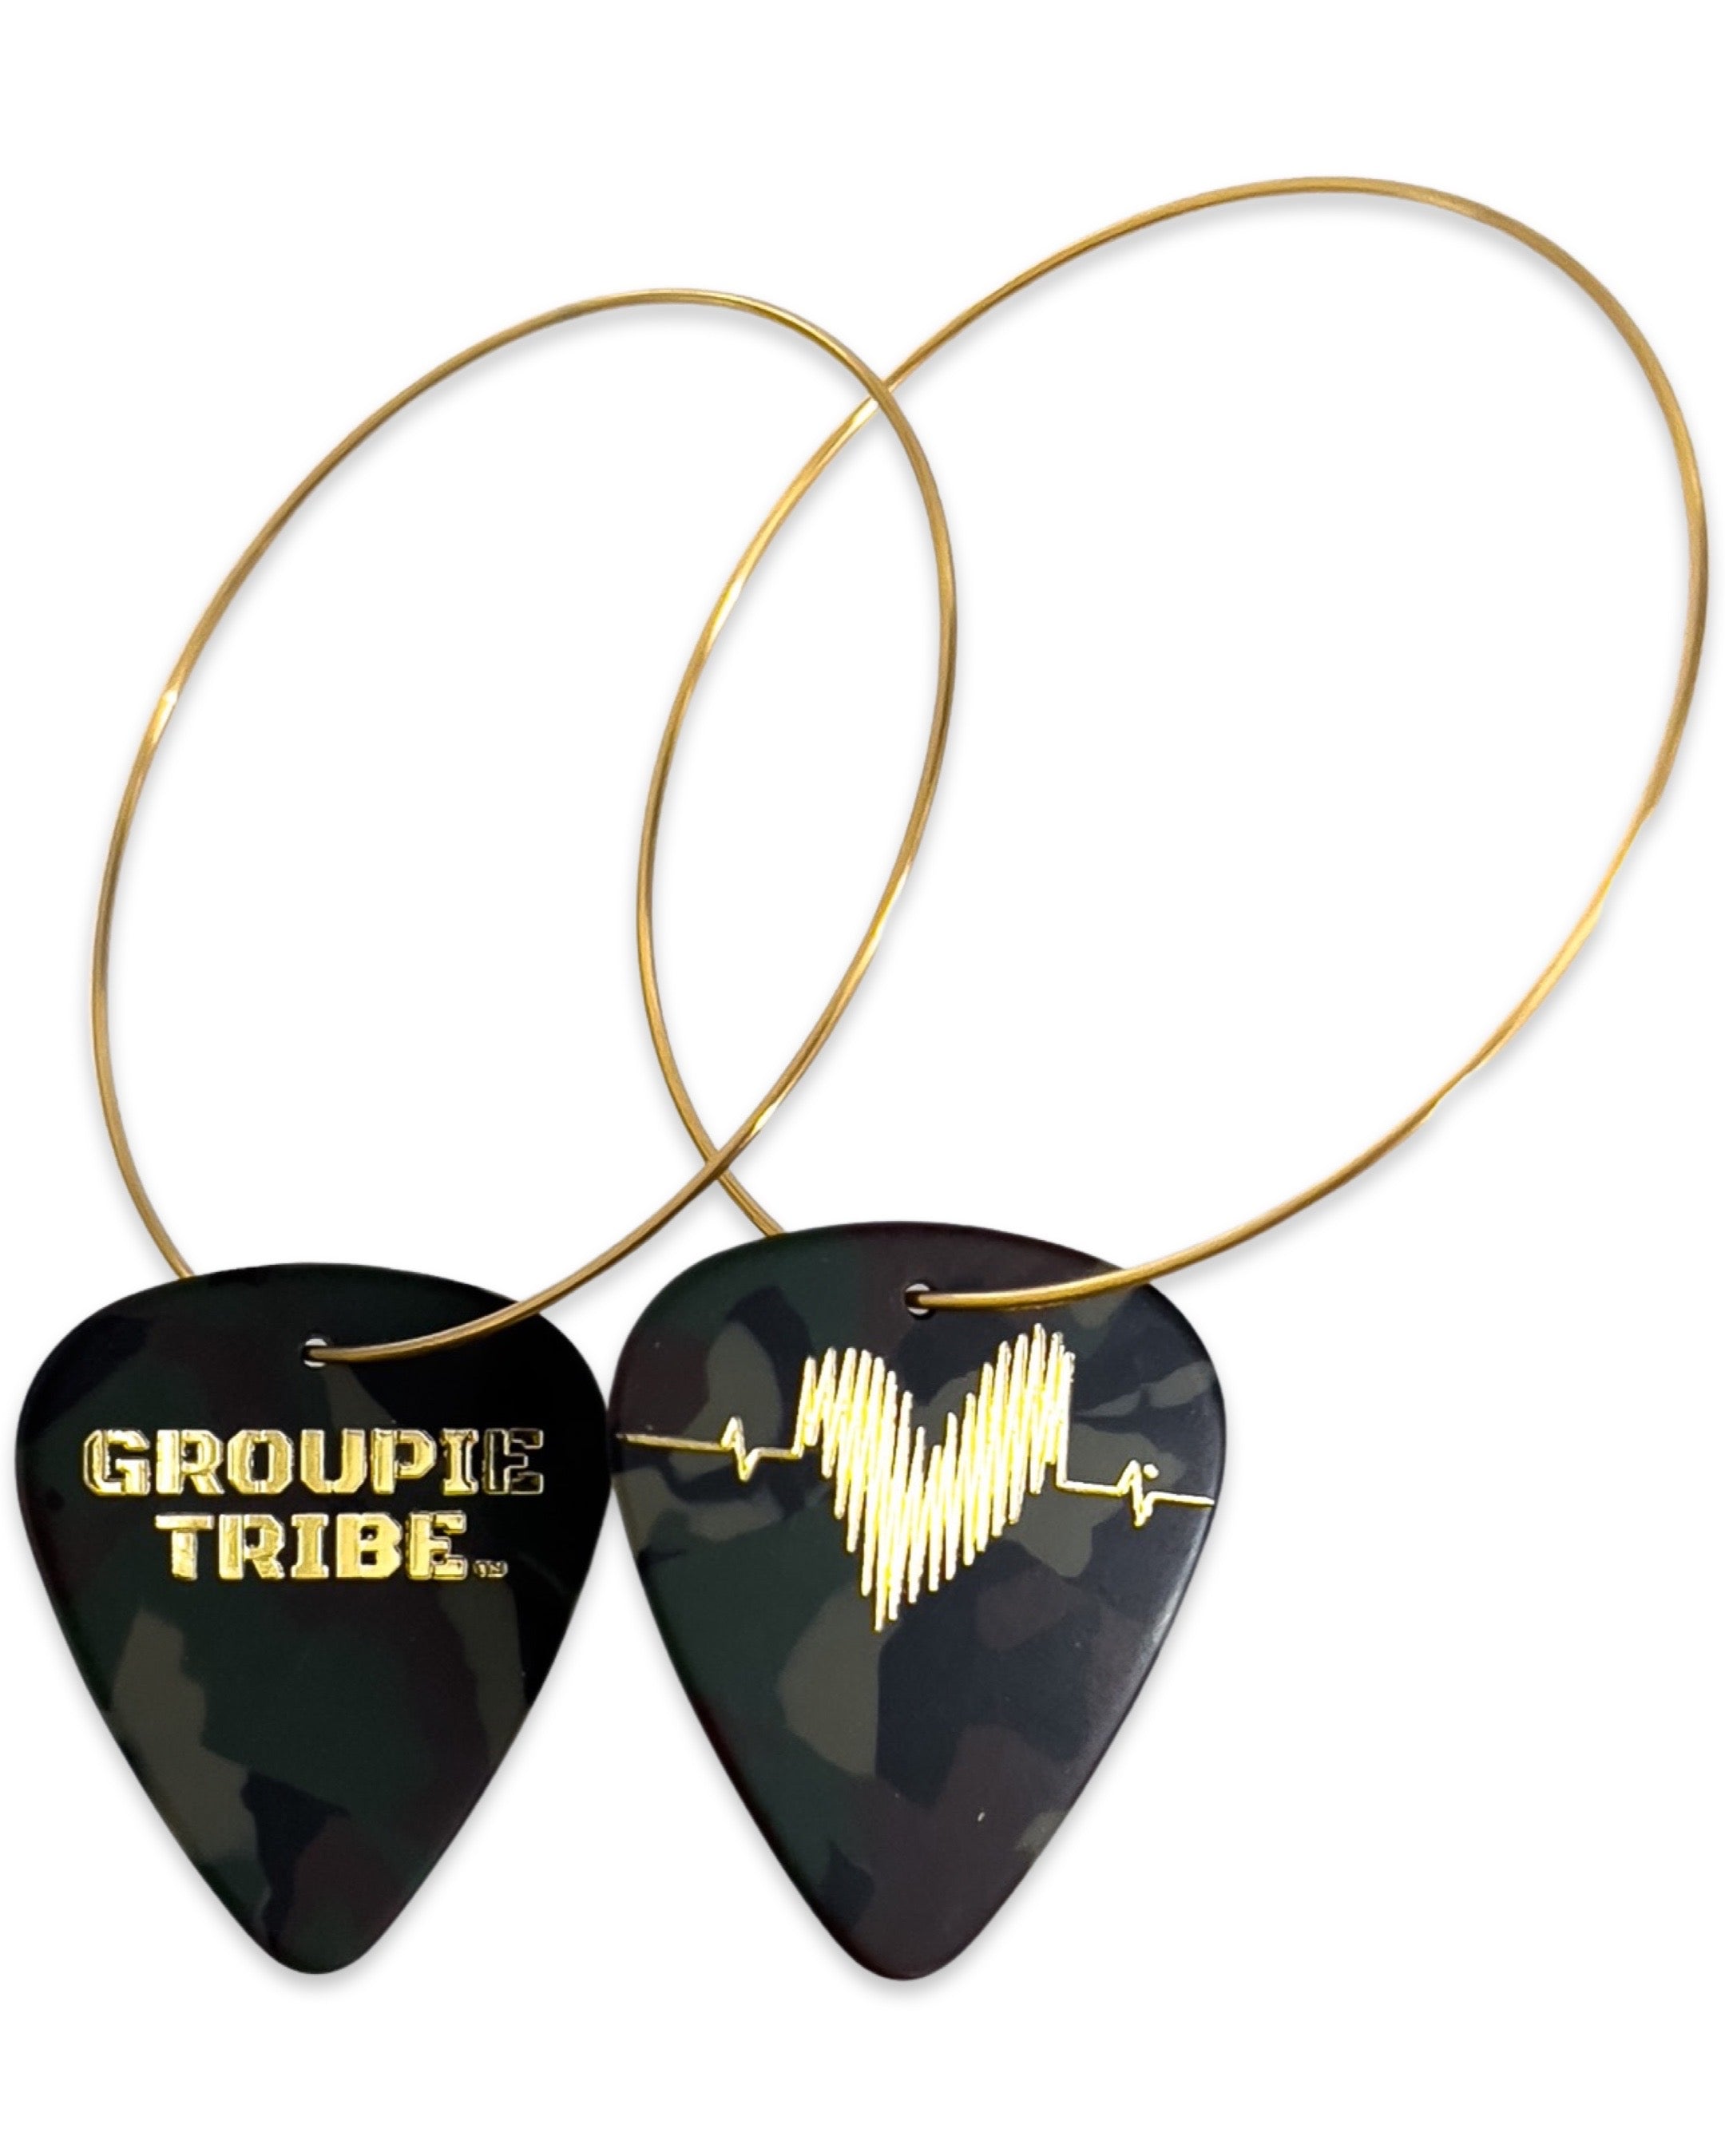 Groupie Tribe Camo Reversible Single Guitar Pick Earrings